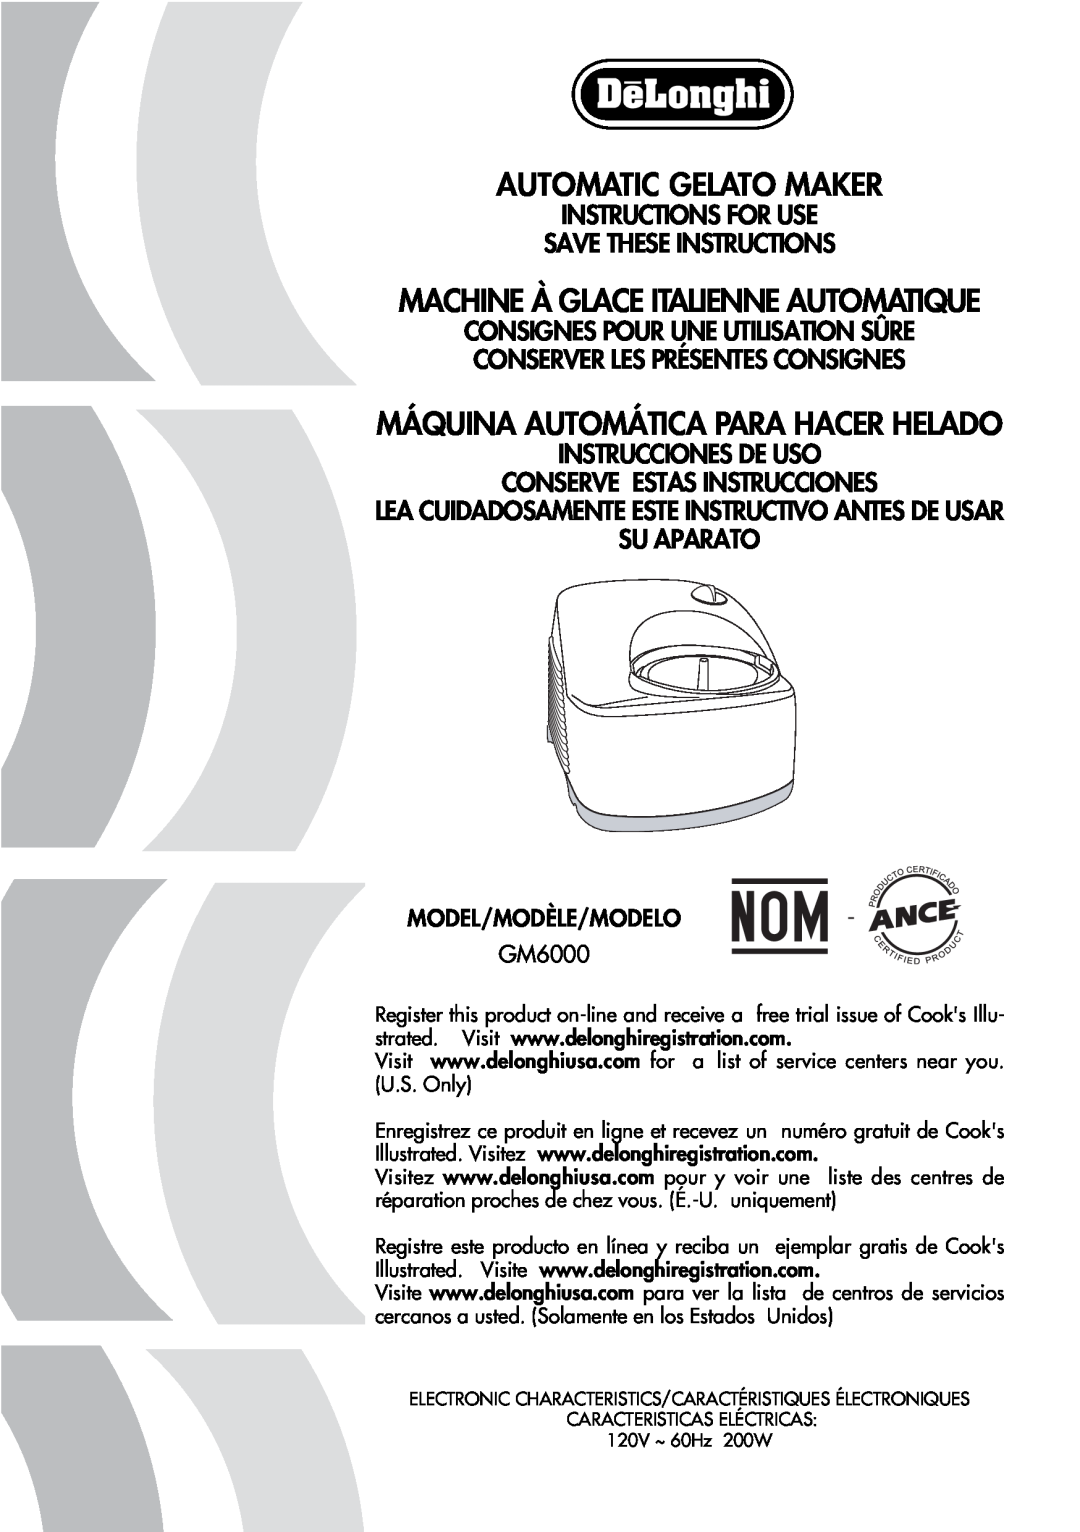 DeLonghi GM6000 manual Automatic Gelato Maker, Machine À Glace Italienne Automatique, Máquina Automática Para Hacer Helado 